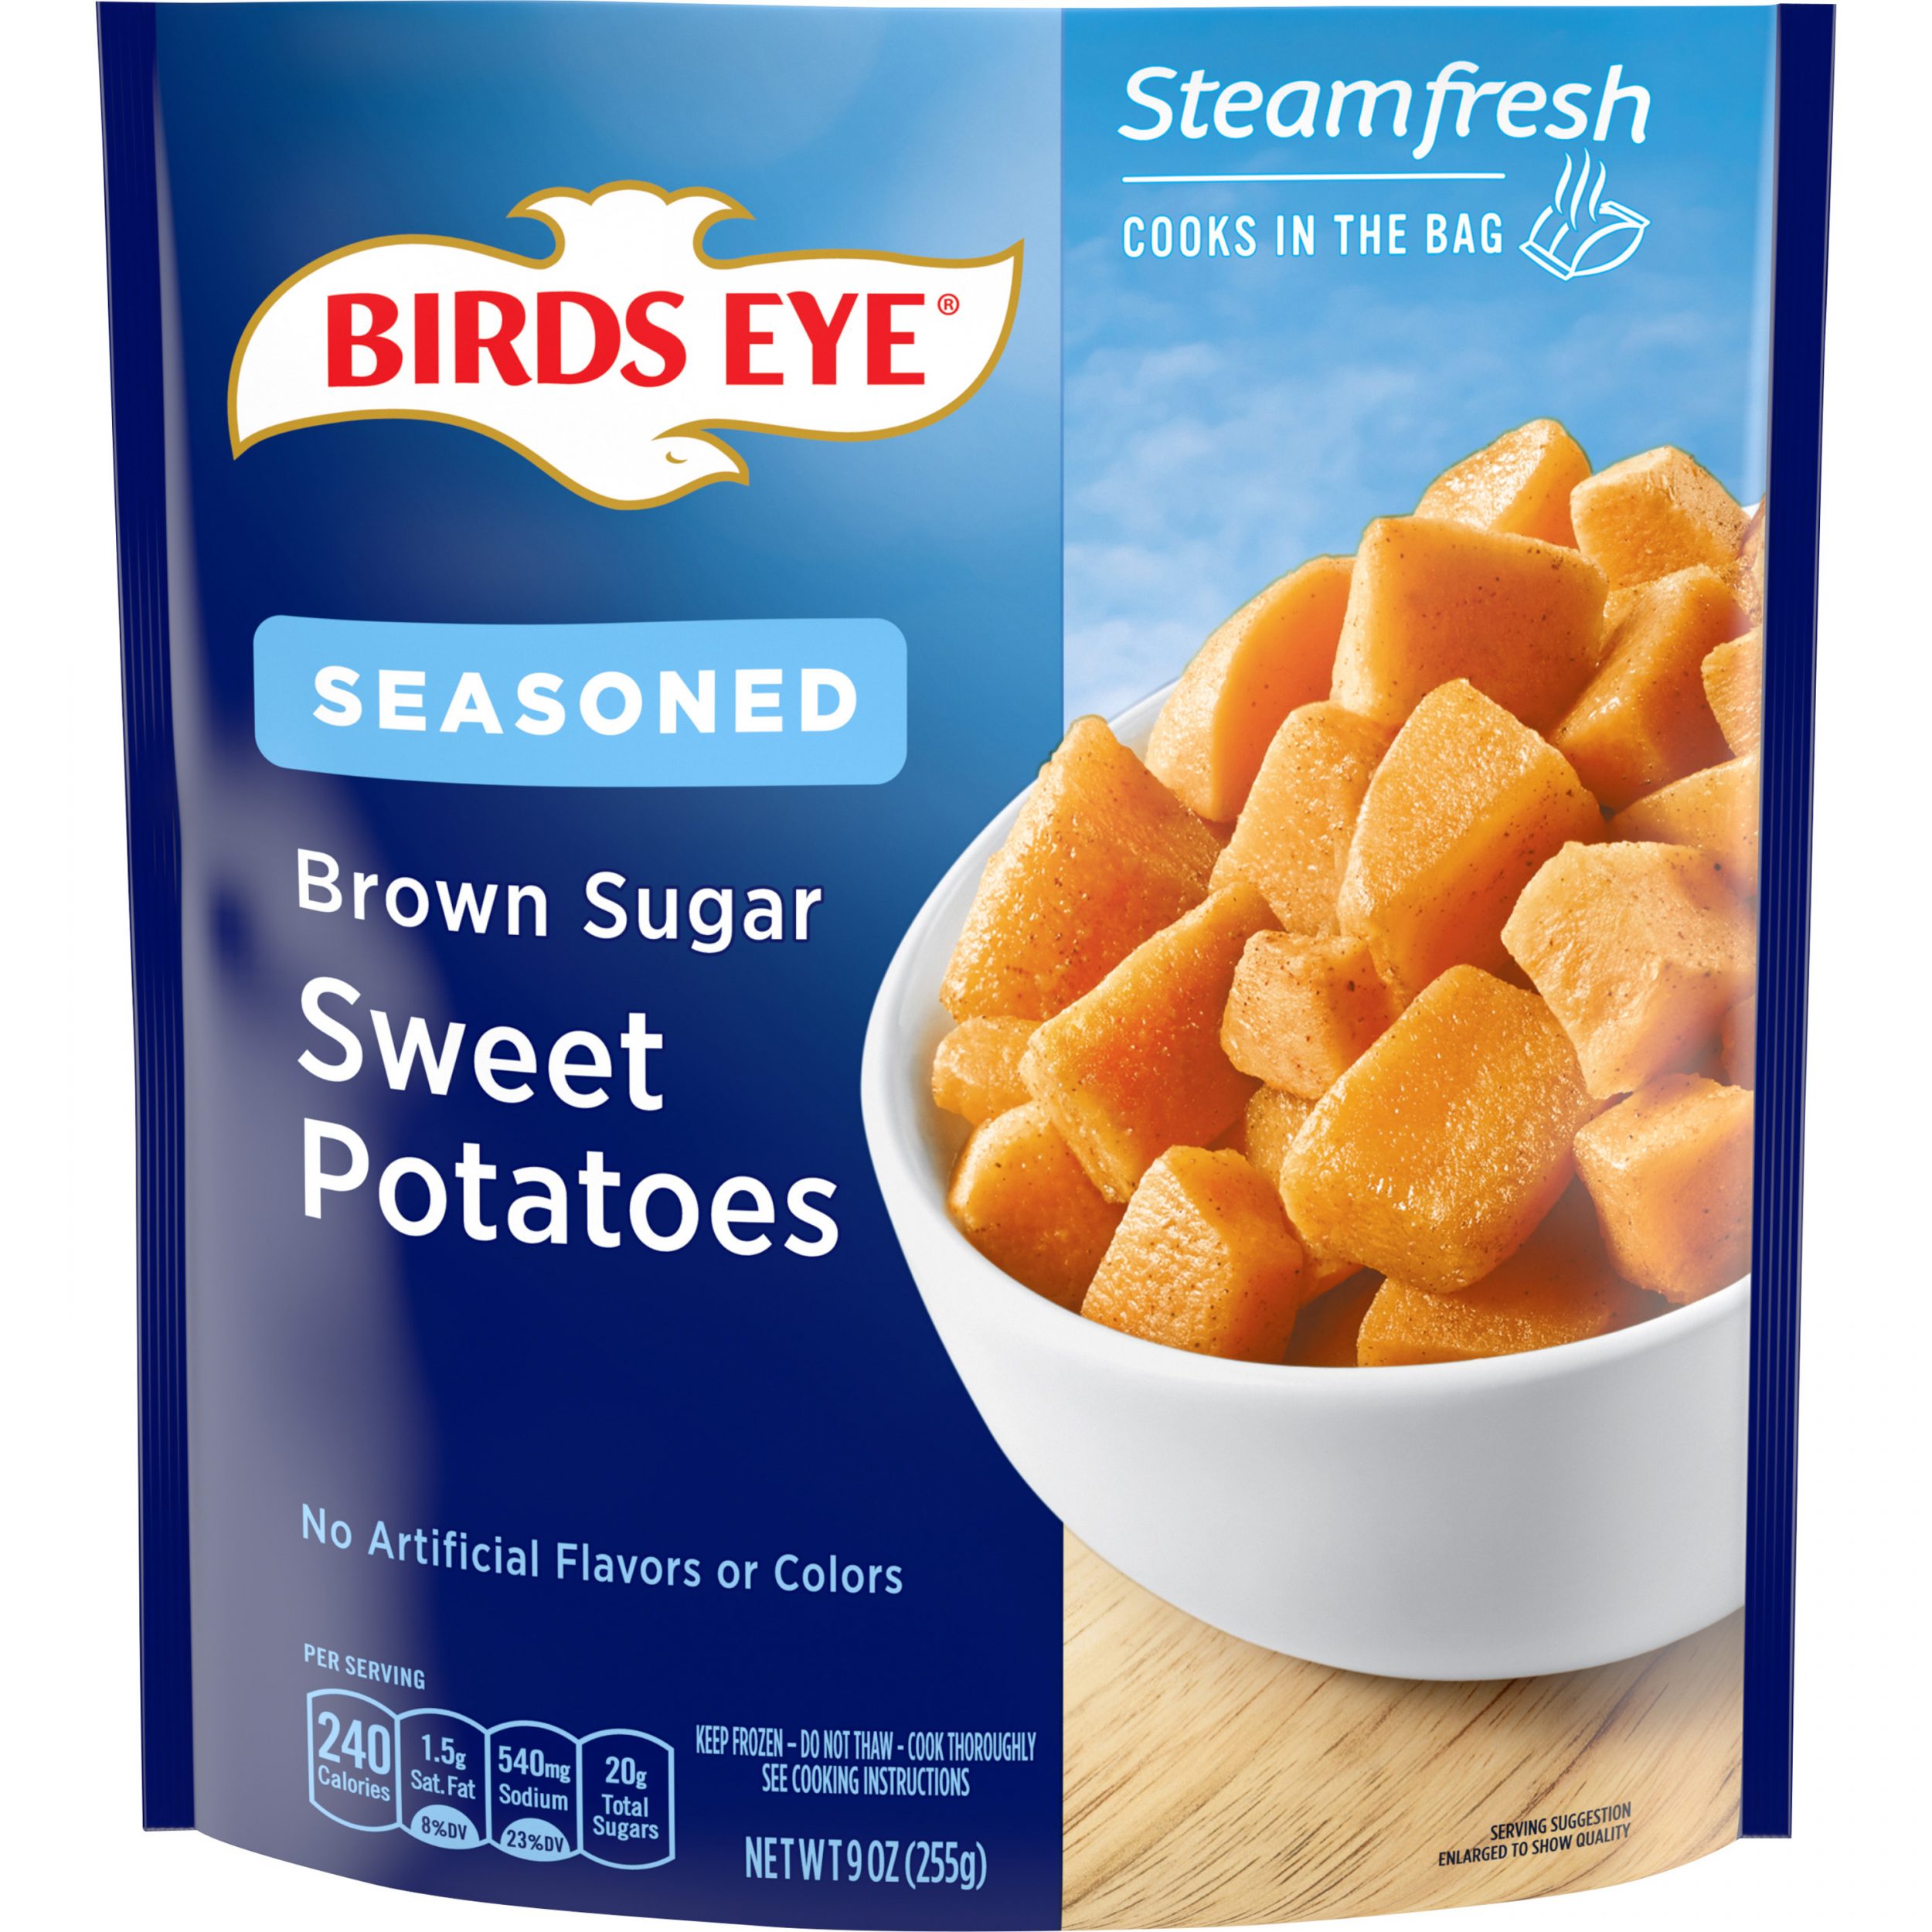 Birds Eye Steamfresh Chef’s Favorites Lightly Seasoned Sweet Potatoes with Brown Sugar